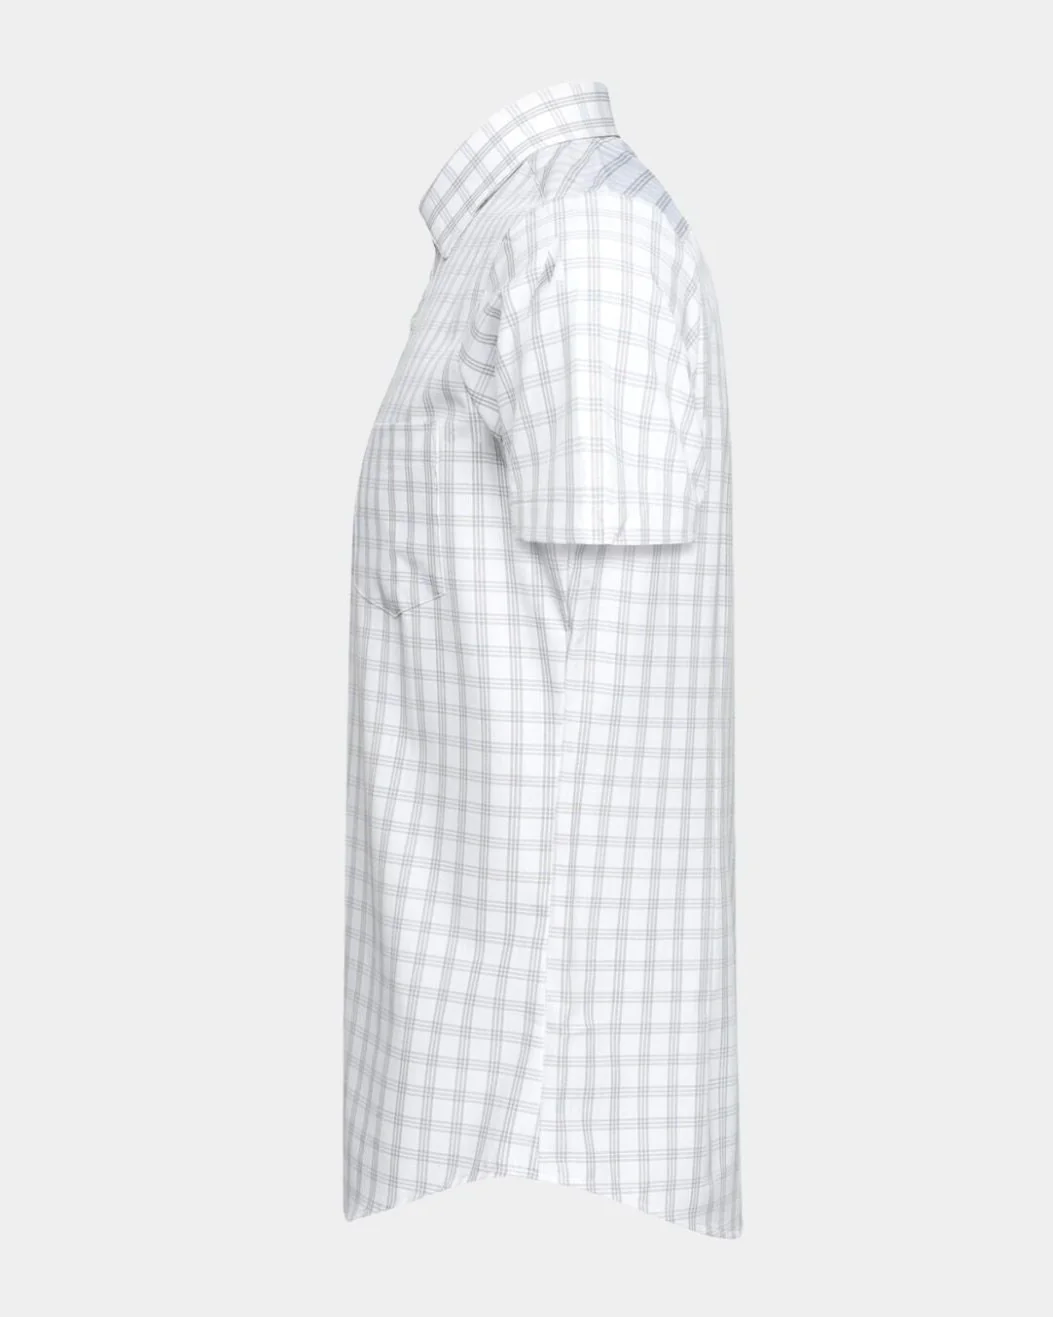 Phenom Classic Grey Tartan Short Sleeve Dress Shirt